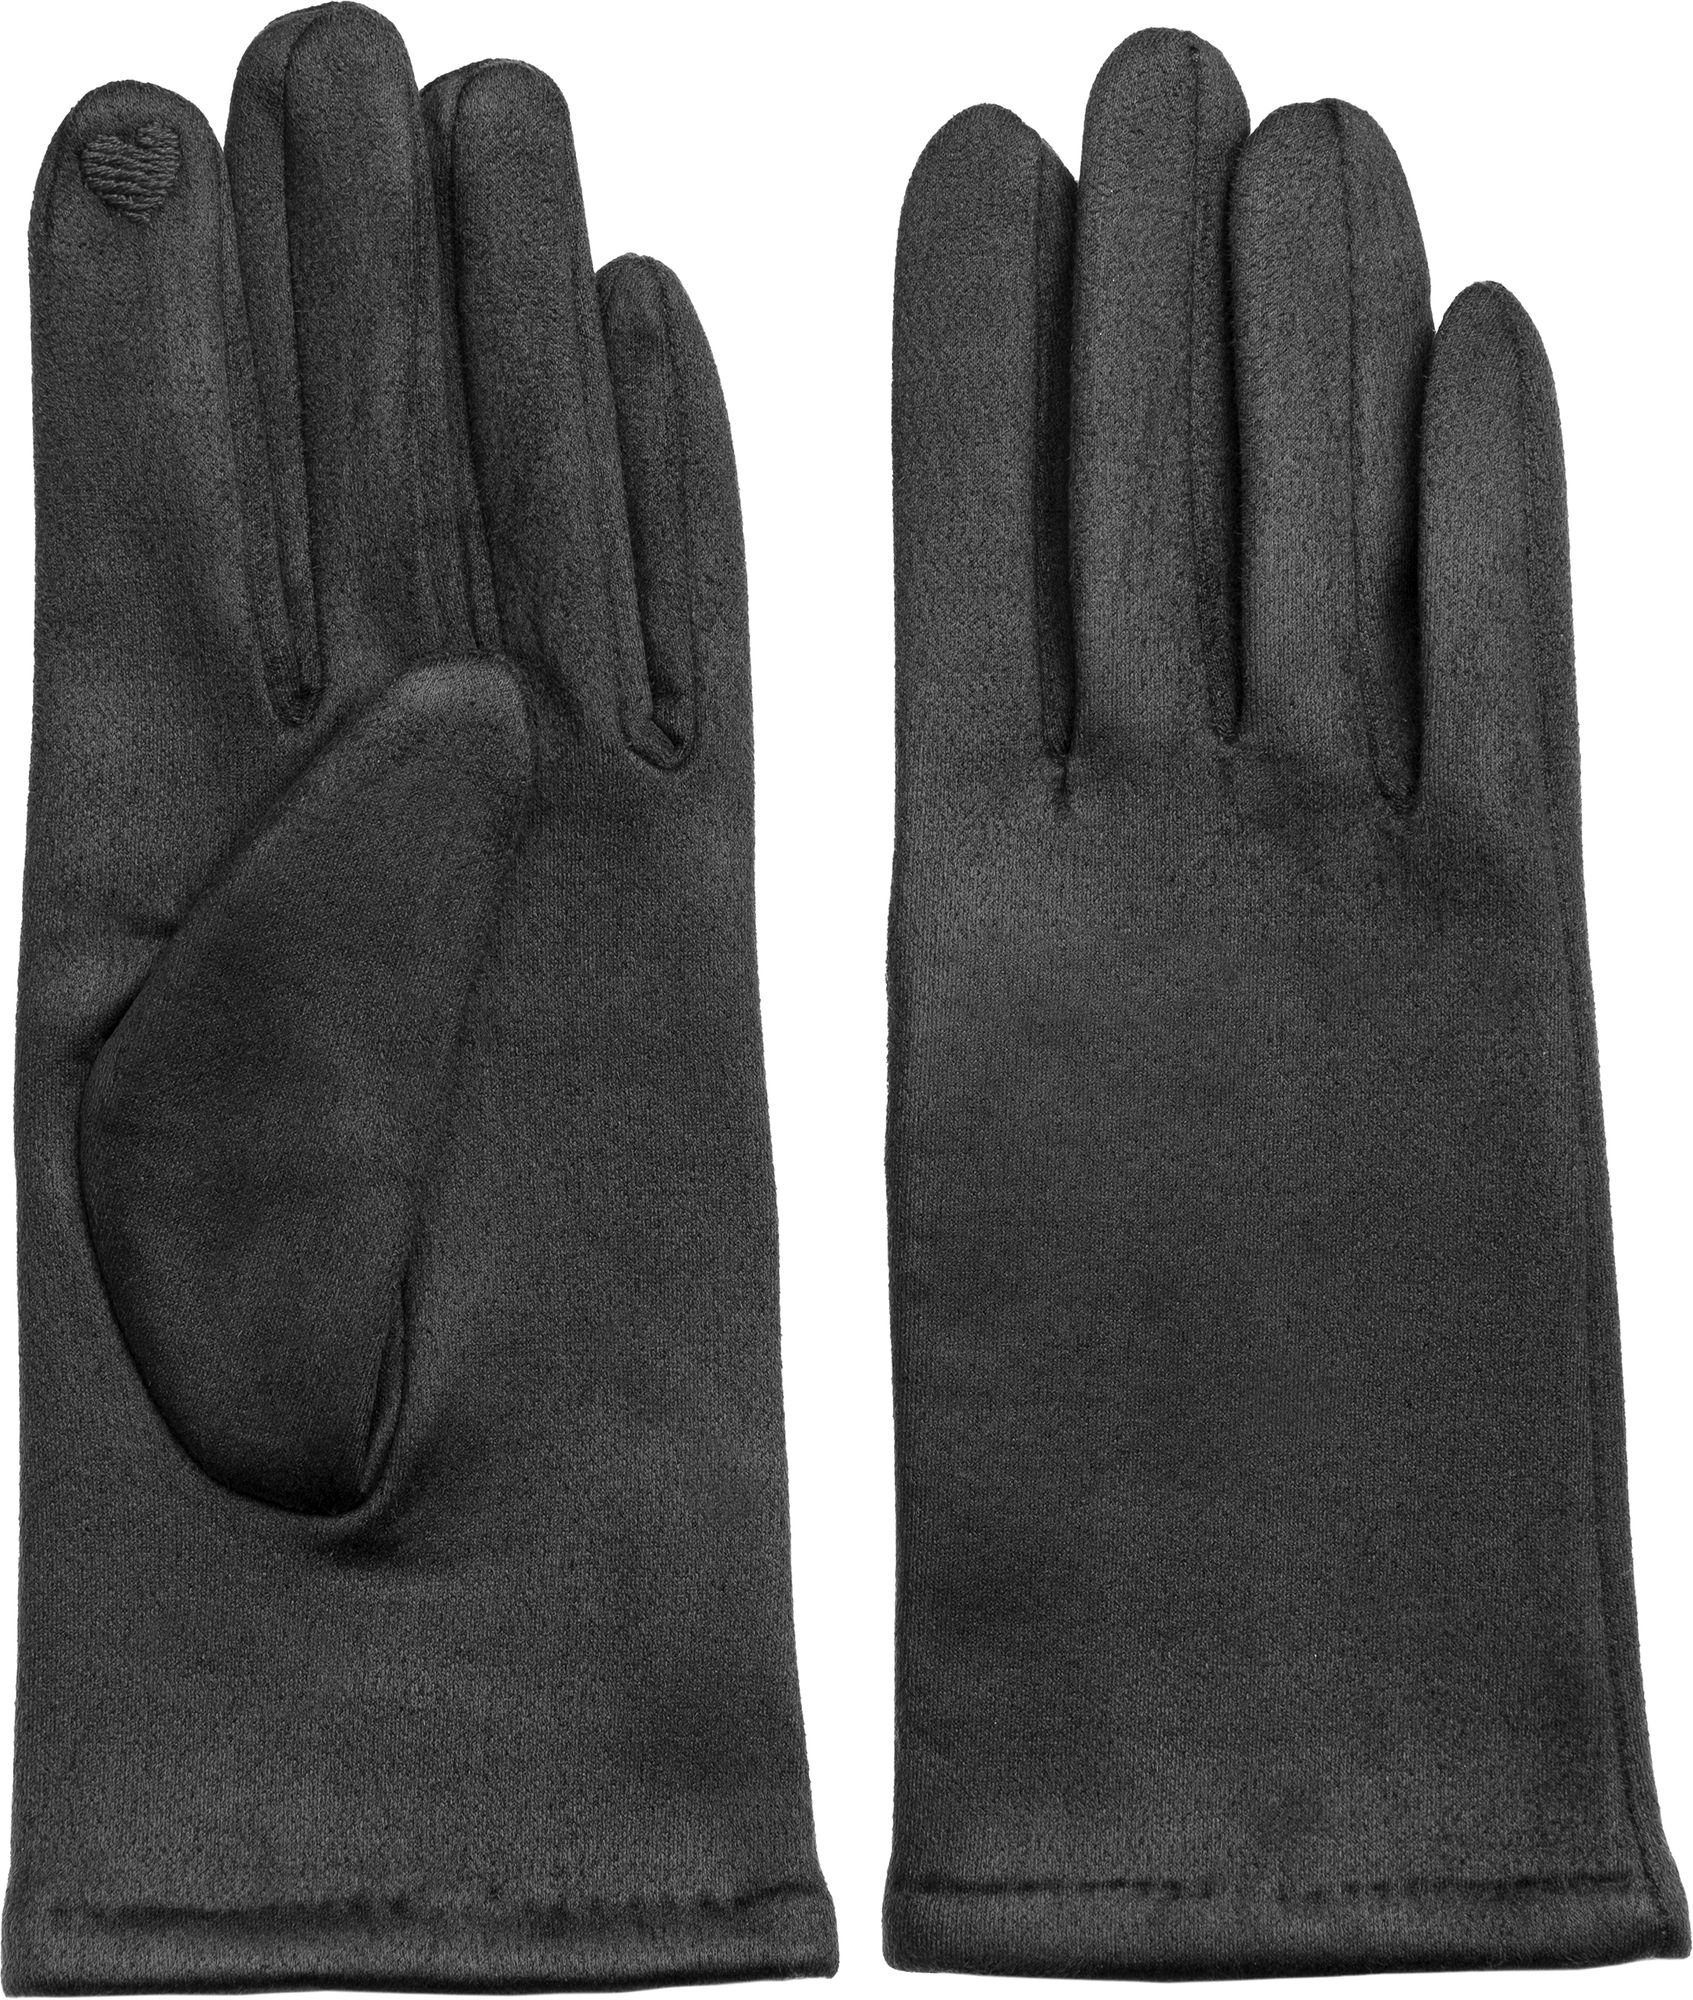 Handschuhe Strickhandschuhe Damen GLV013 uni dunkelgrau Winter Caspar klassisch elegante